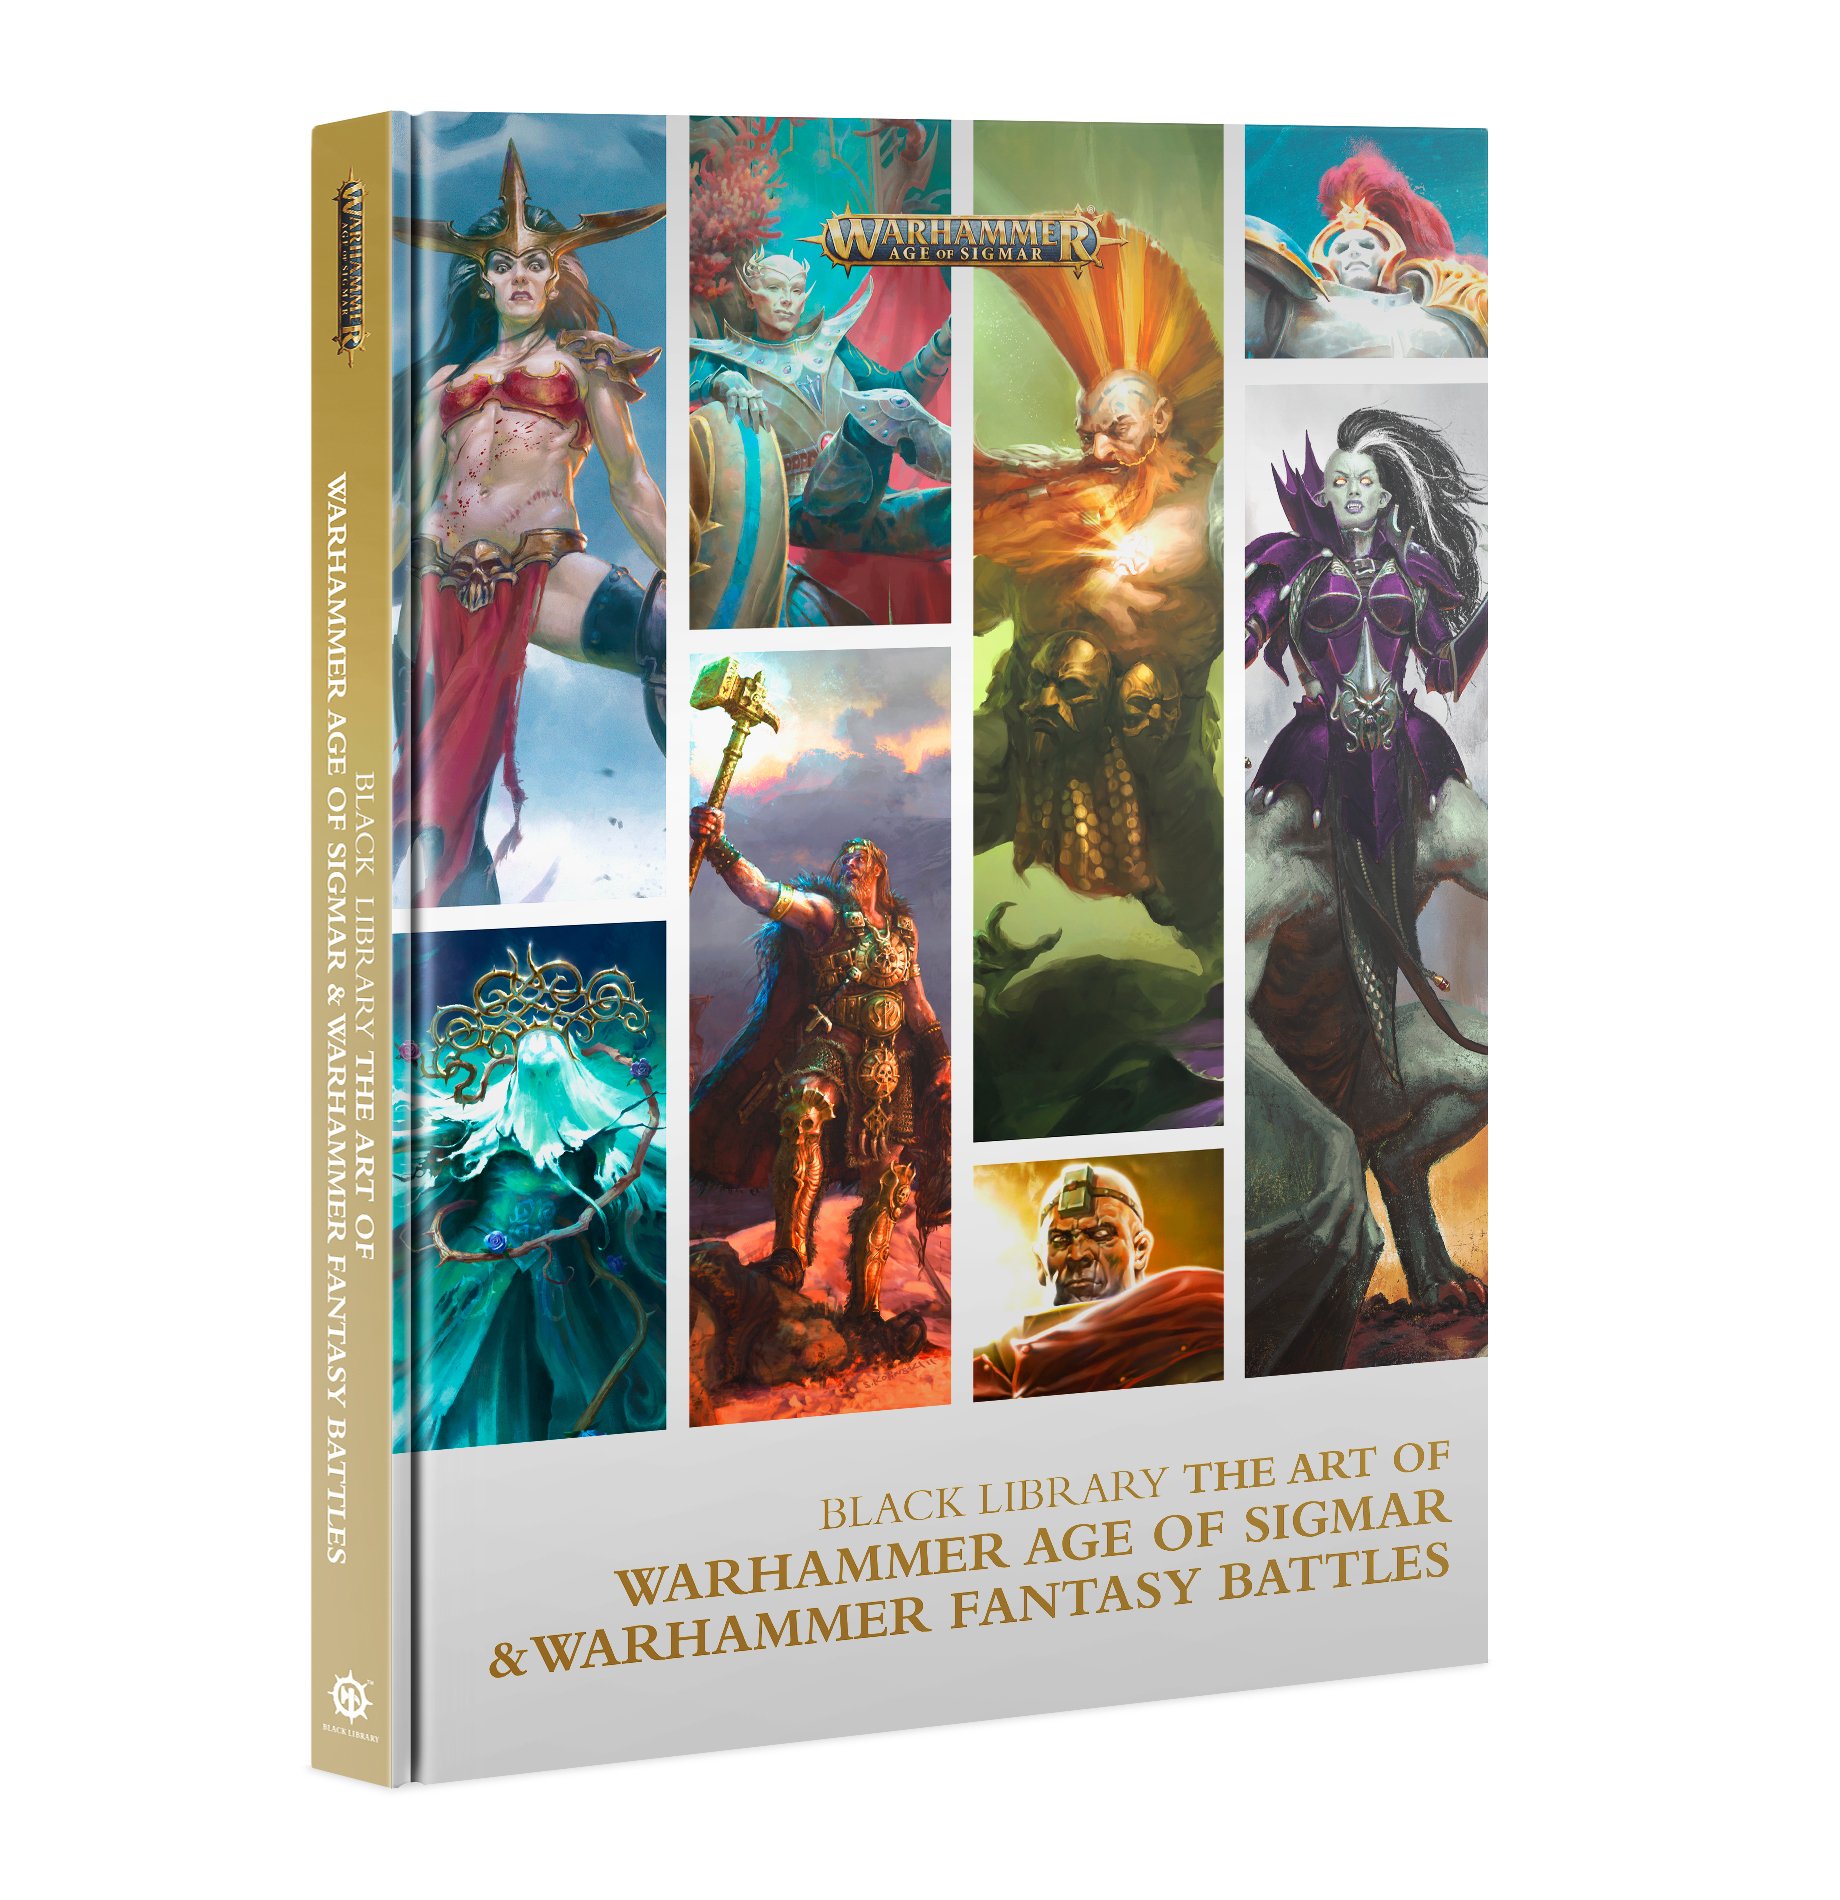 Black Library: The Art of Warhammer Age of Sigmar & Warhammer Fantasy Battles 